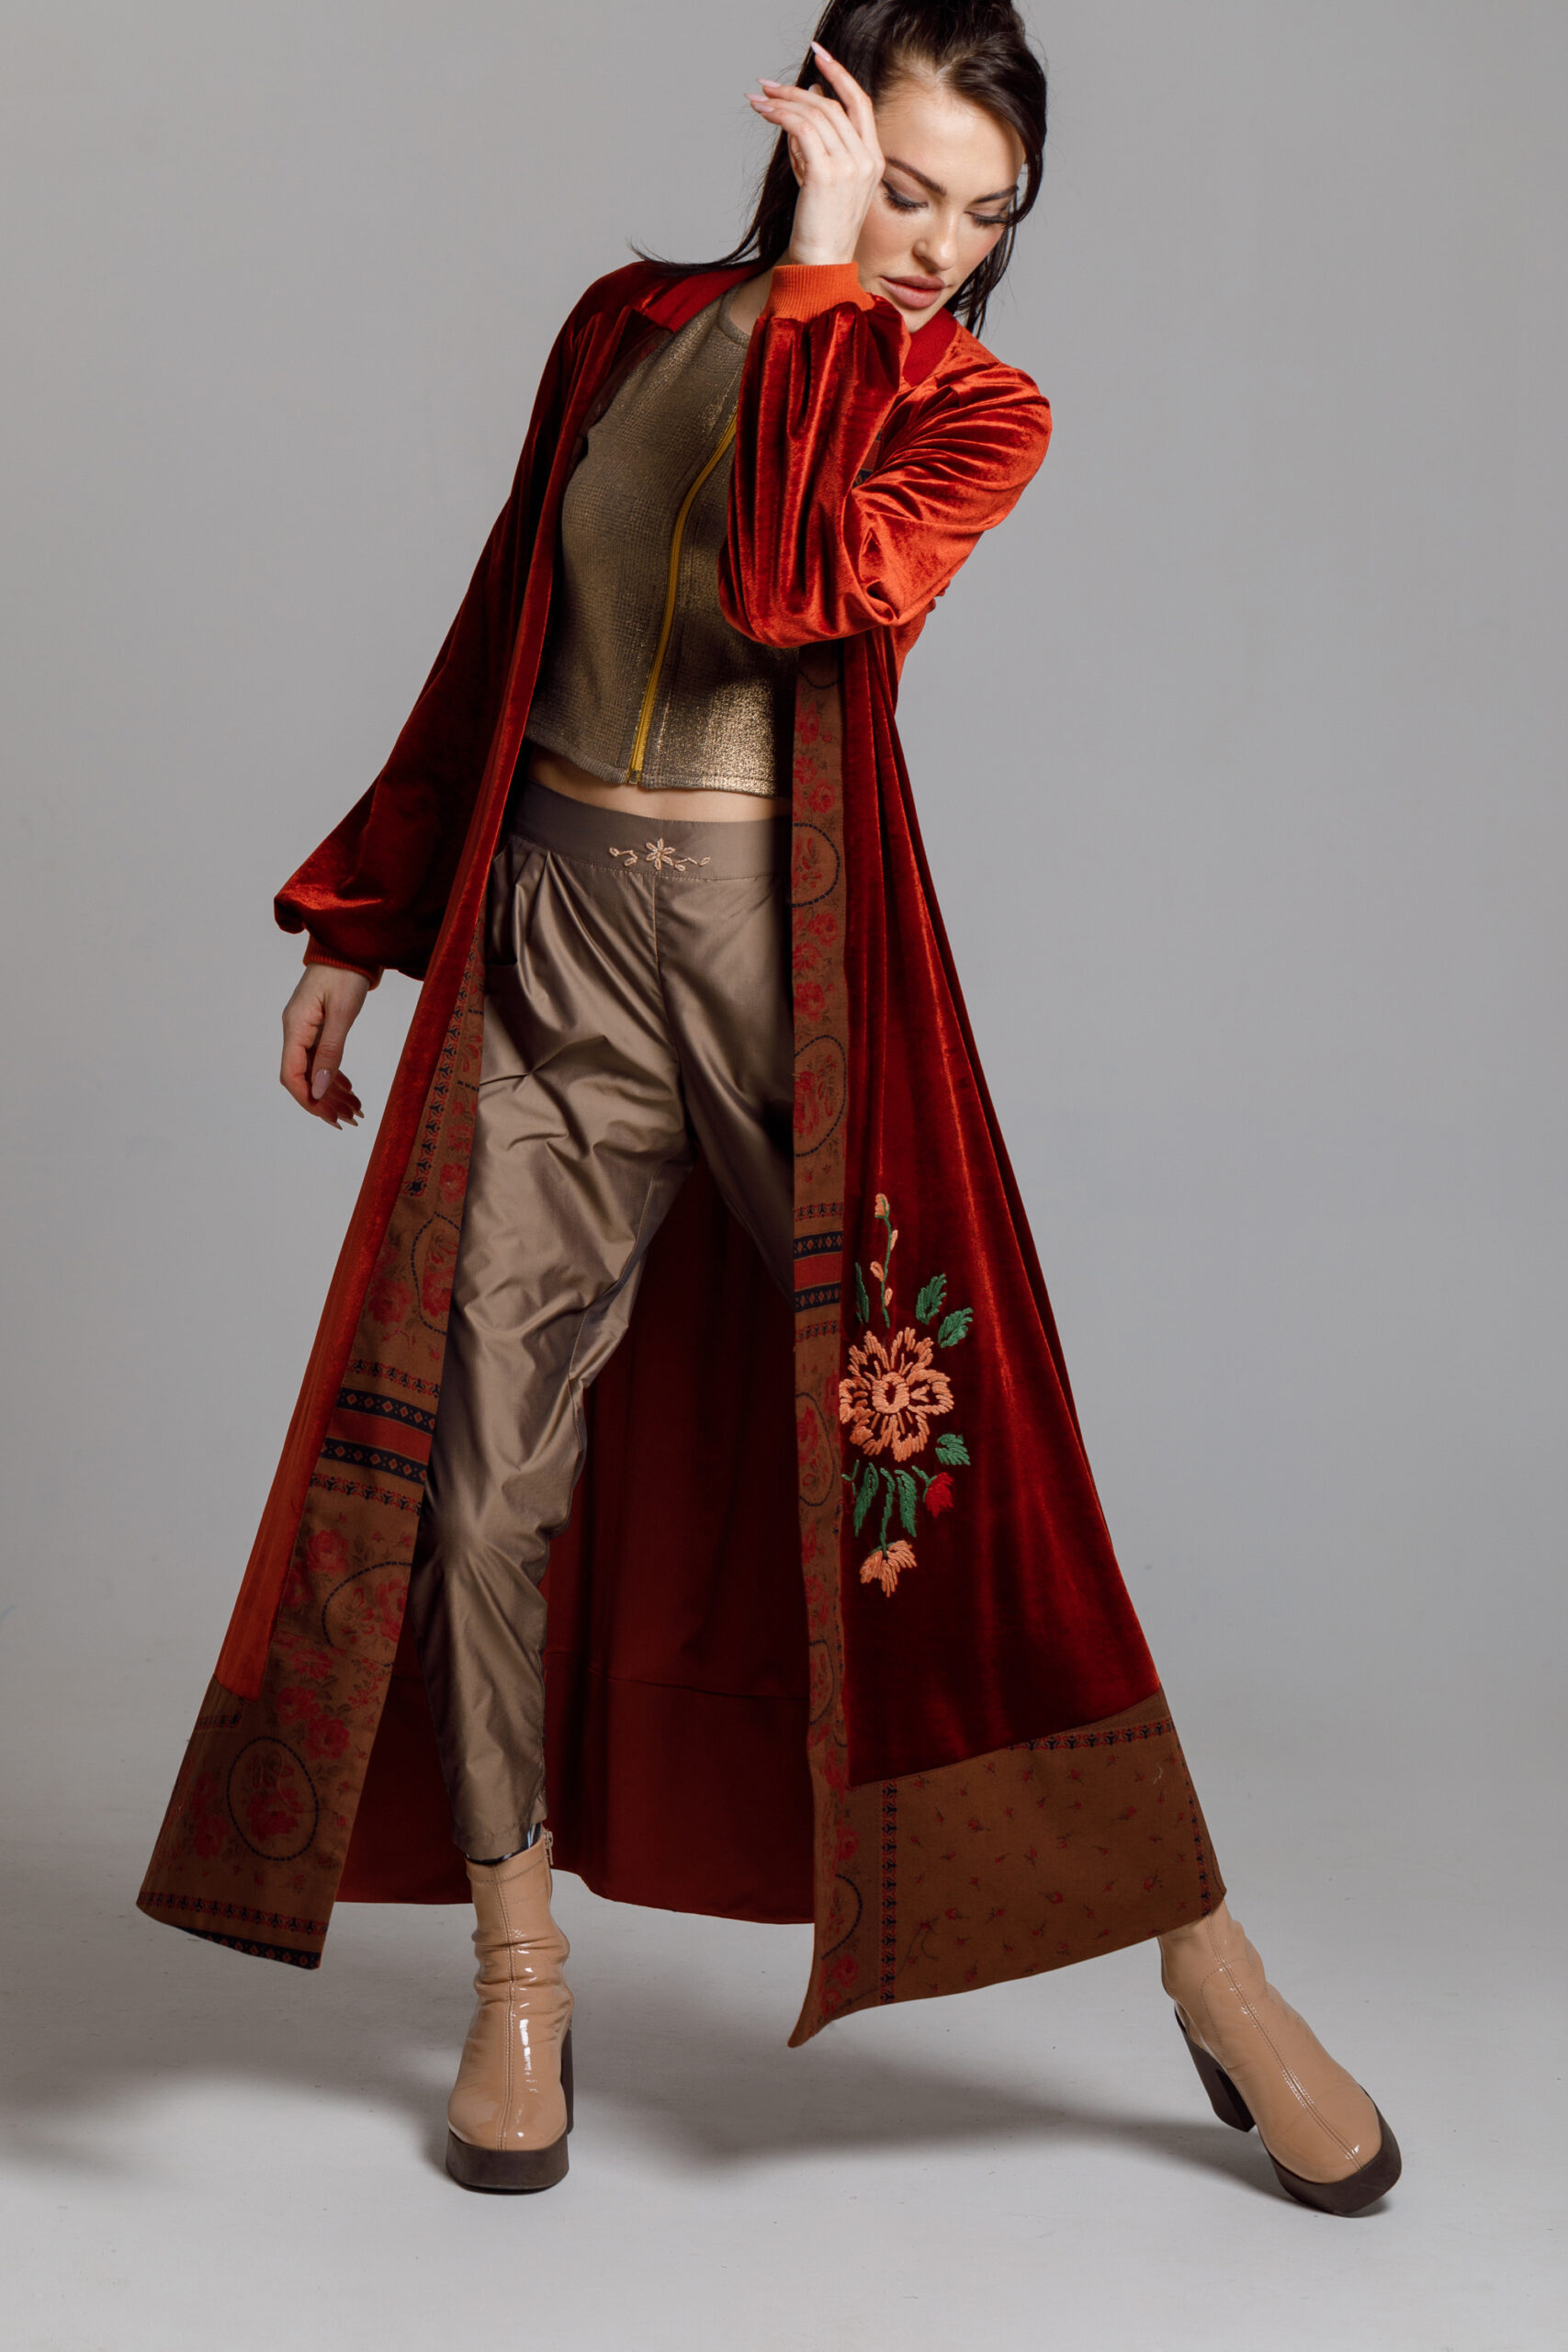 BRIVIDA bohemian velvet cardigan. Natural fabrics, original design, handmade embroidery